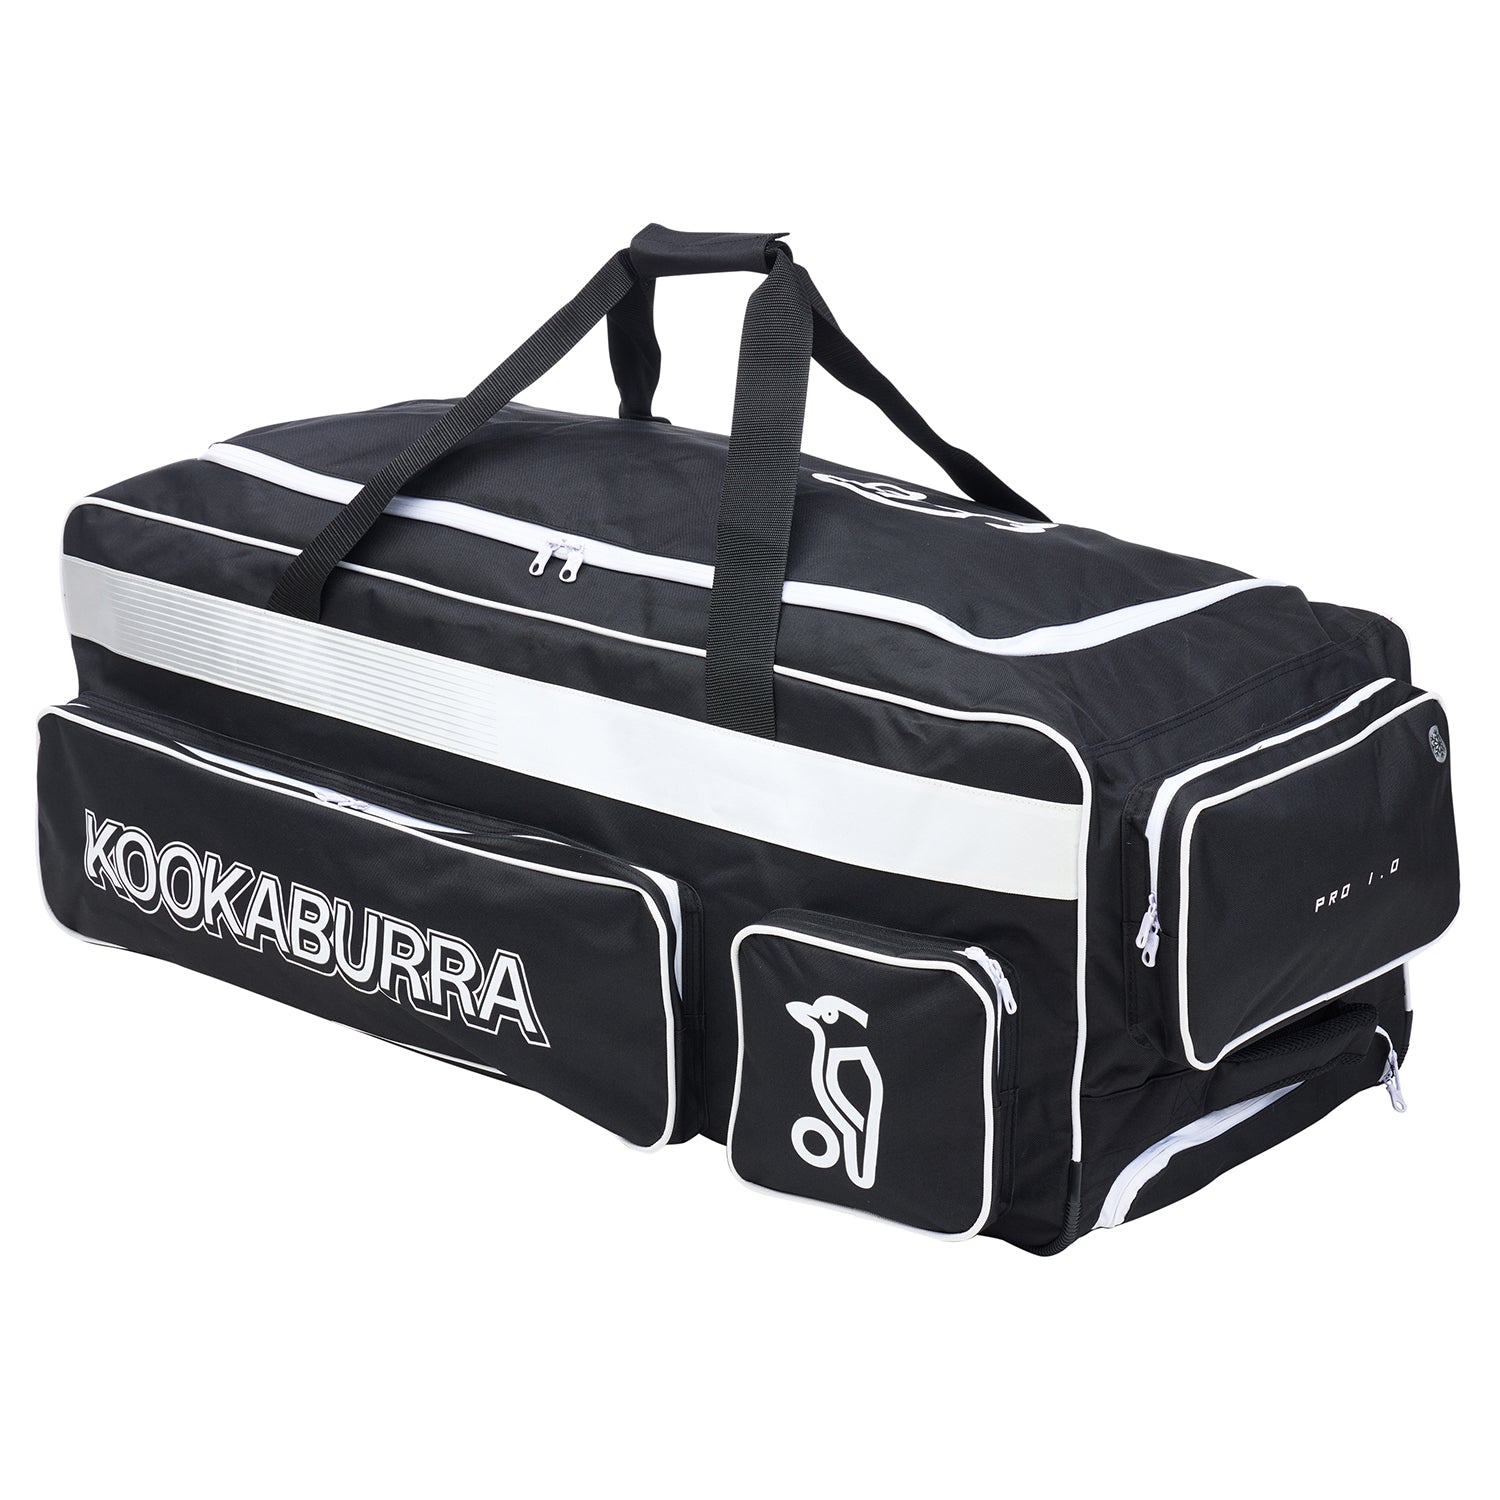 Kookaburra Pro 1.0 Cricket Wheelie Bag